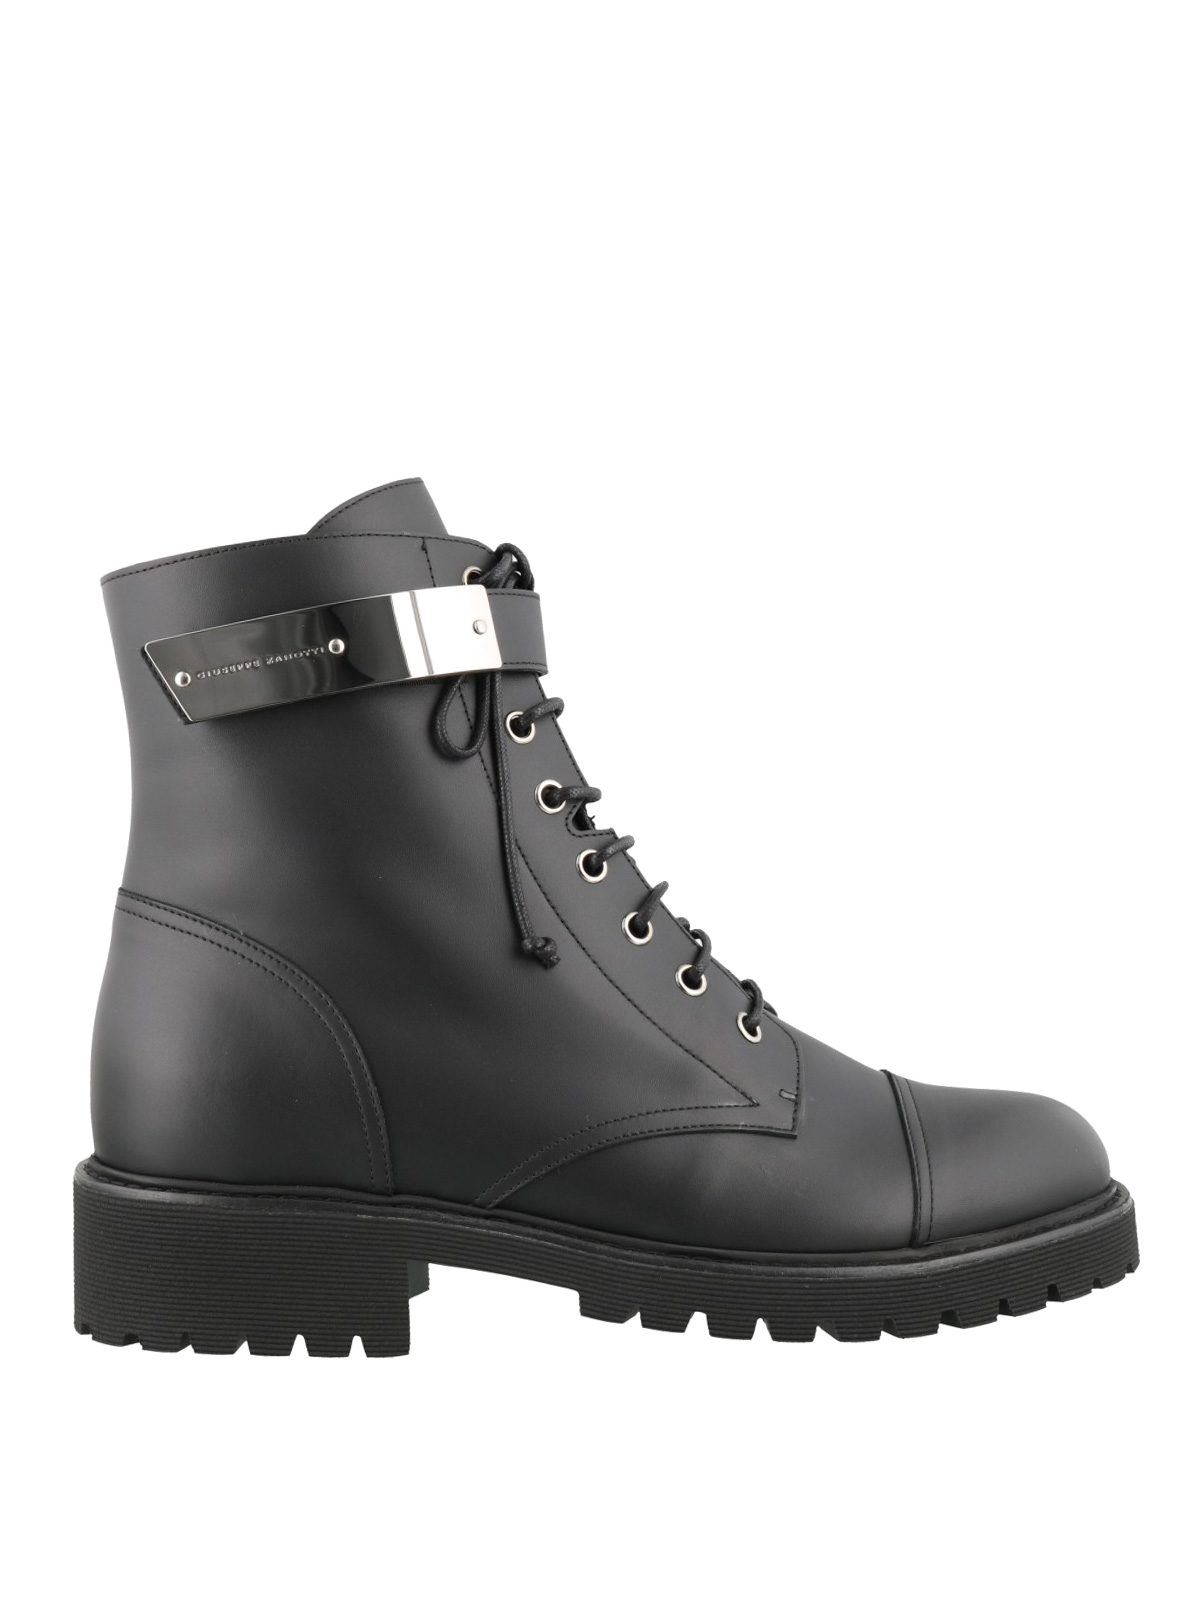 Giuseppe Zanotti Logo Plaque Black Leather Ankle Boots